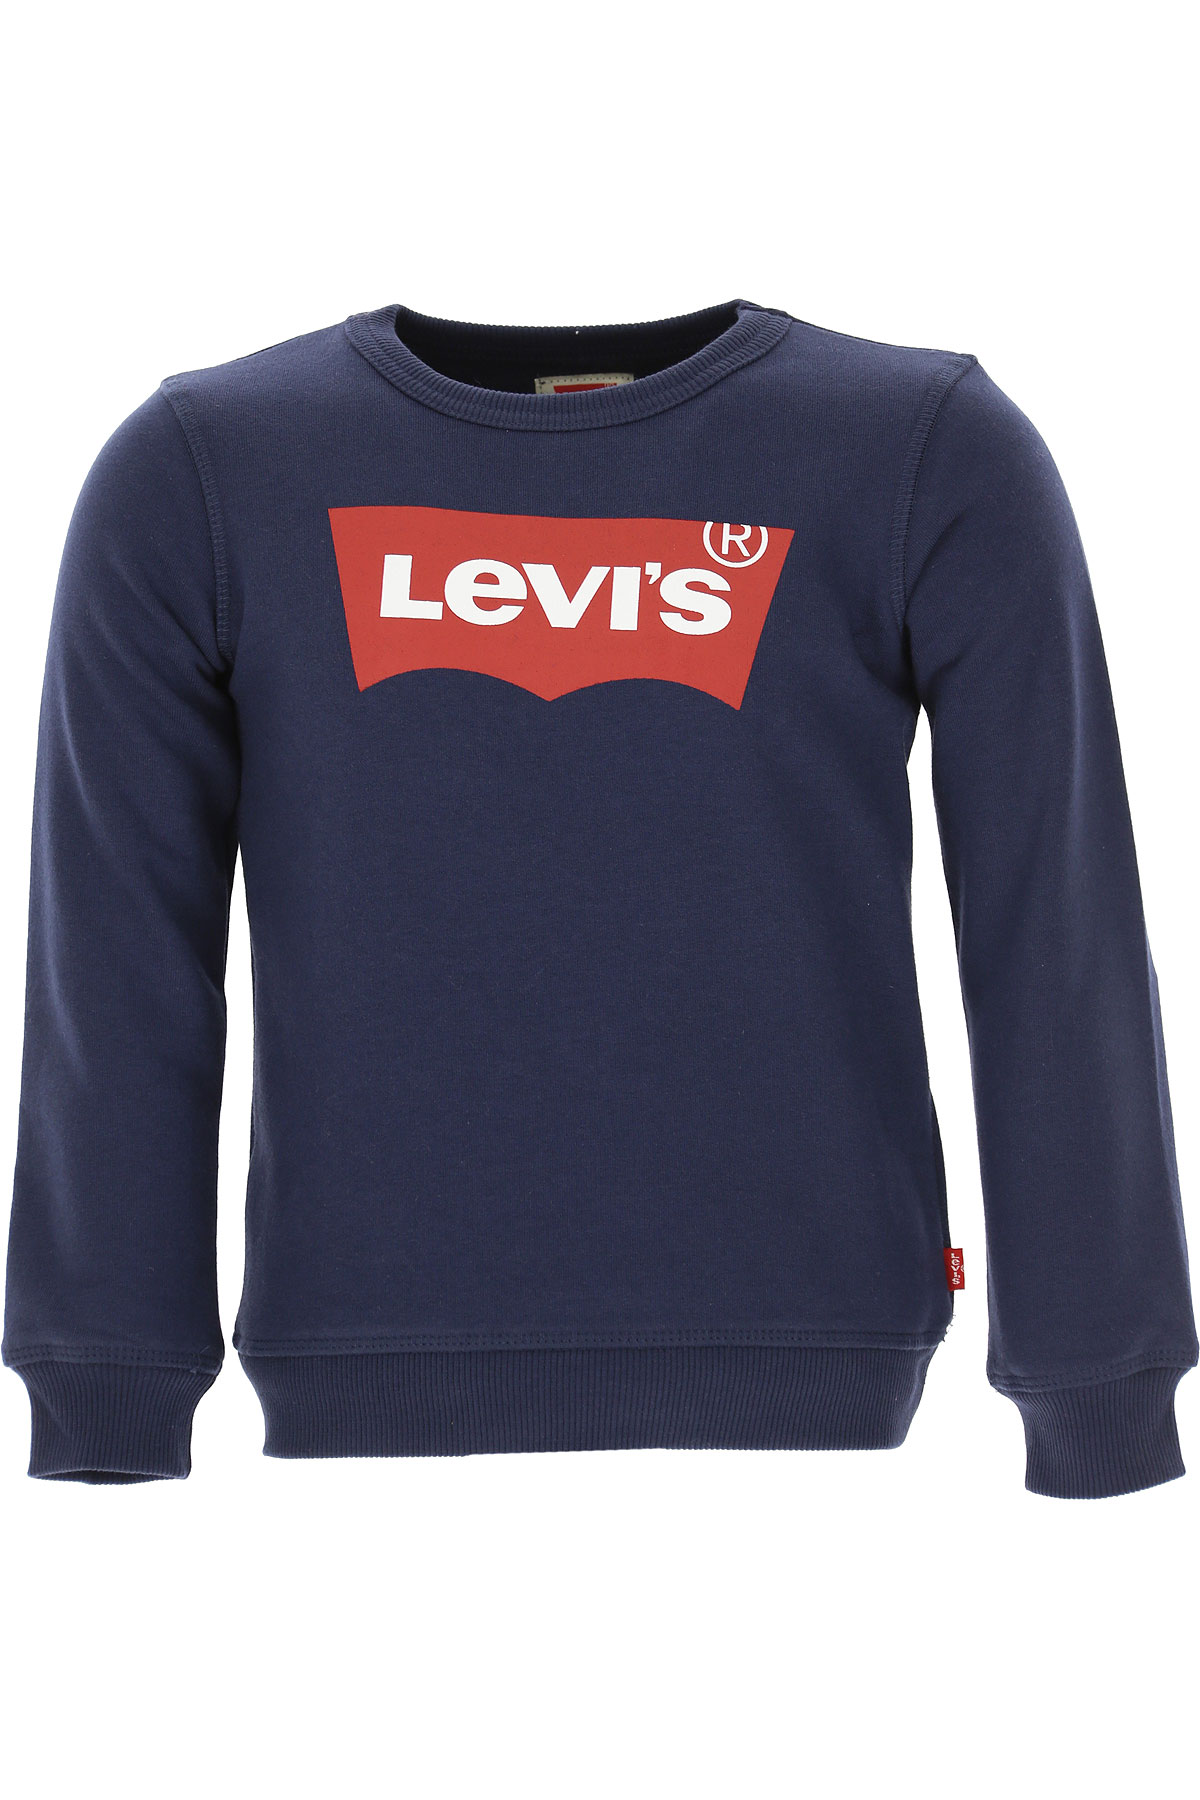 Levis Kinder Sweatshirt & Kapuzenpullover für Jungen Günstig im Sale, Marine blau, Terracotto-Fliesen, 2017, 10Y 12Y 14Y 4Y 6Y 8Y